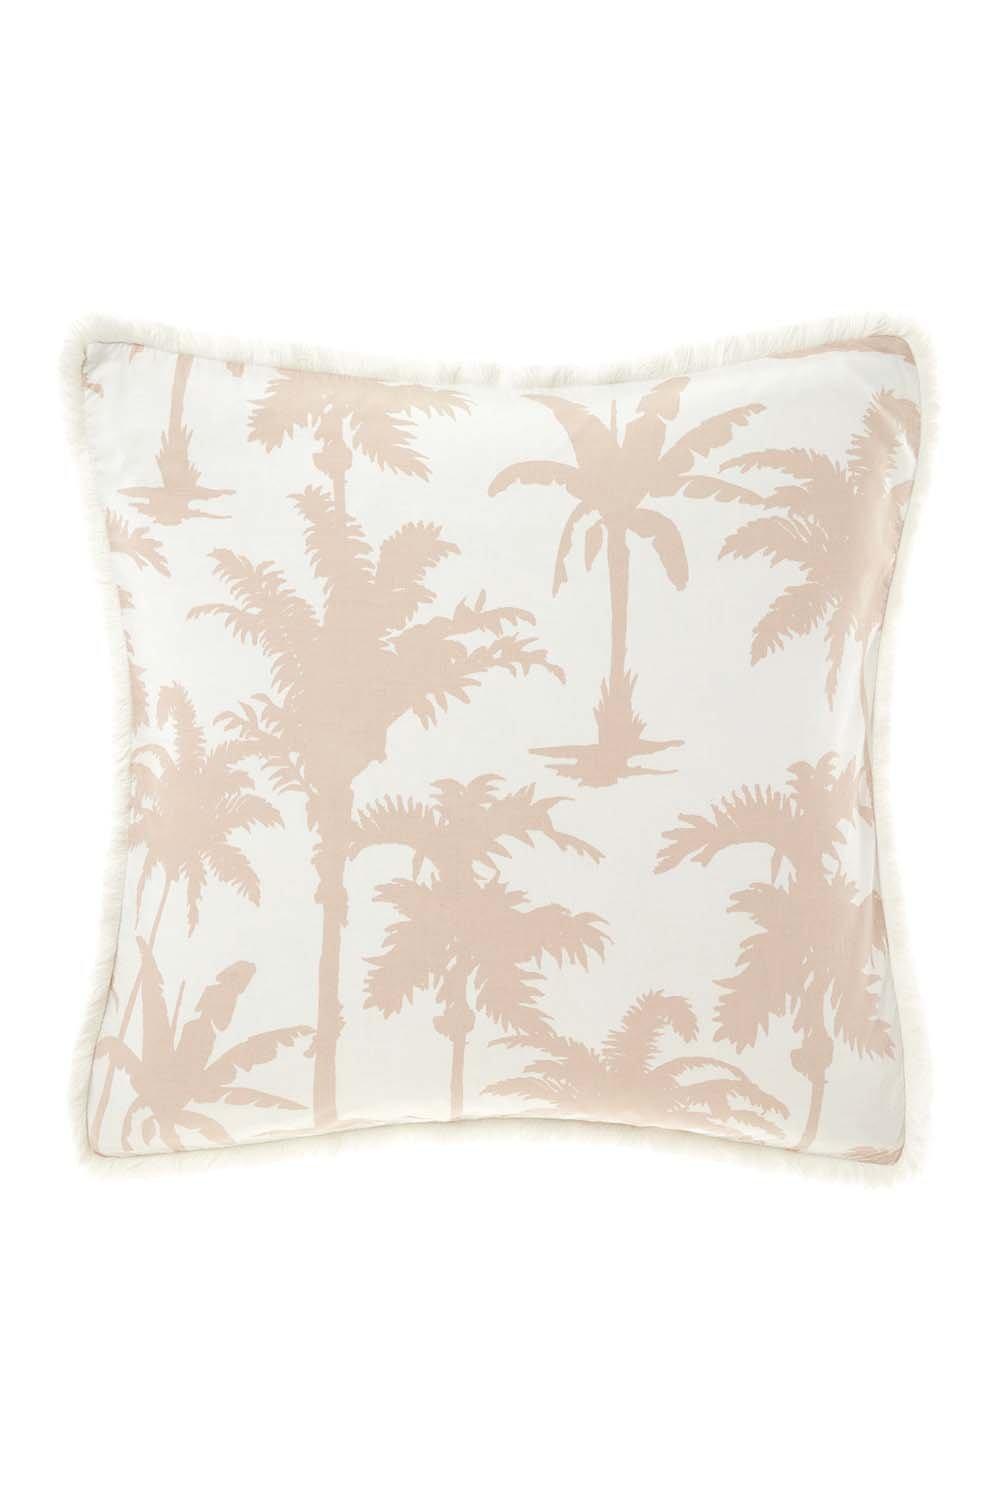 Linen House Luana Floral Fringed Pillowcase Sham